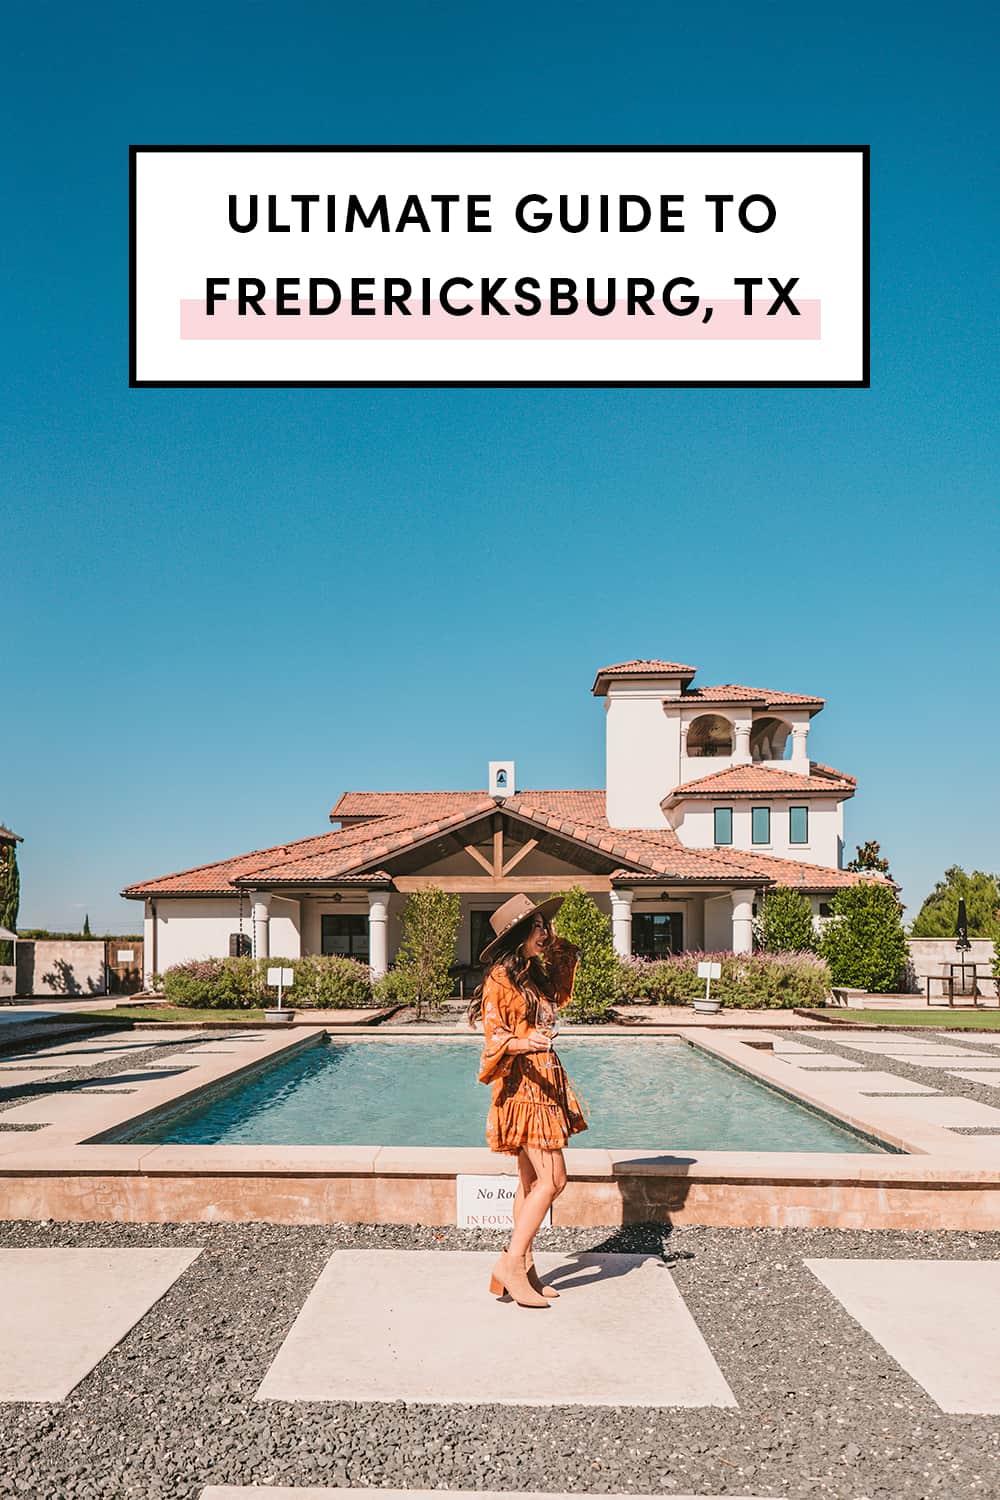 Ultimate guide to Fredericksburg Texas | wineries restaurants shops vineyards TX